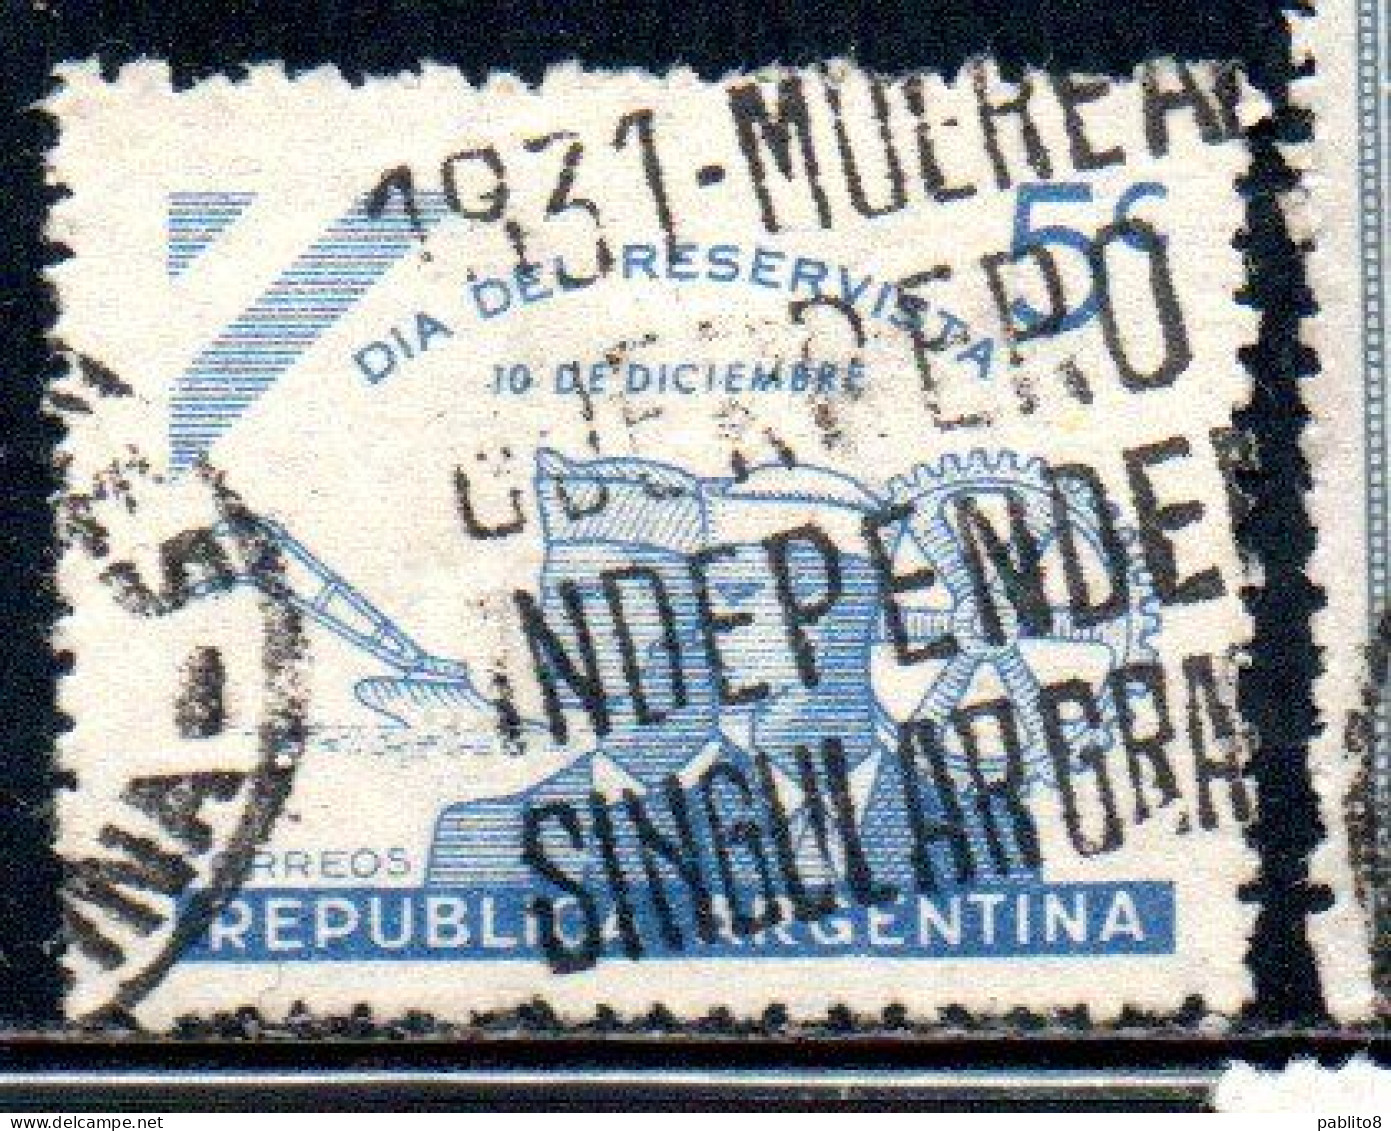 ARGENTINA 1944 DAY OF RESERVISTS 5c USED USADO OBLITERE' - Usati